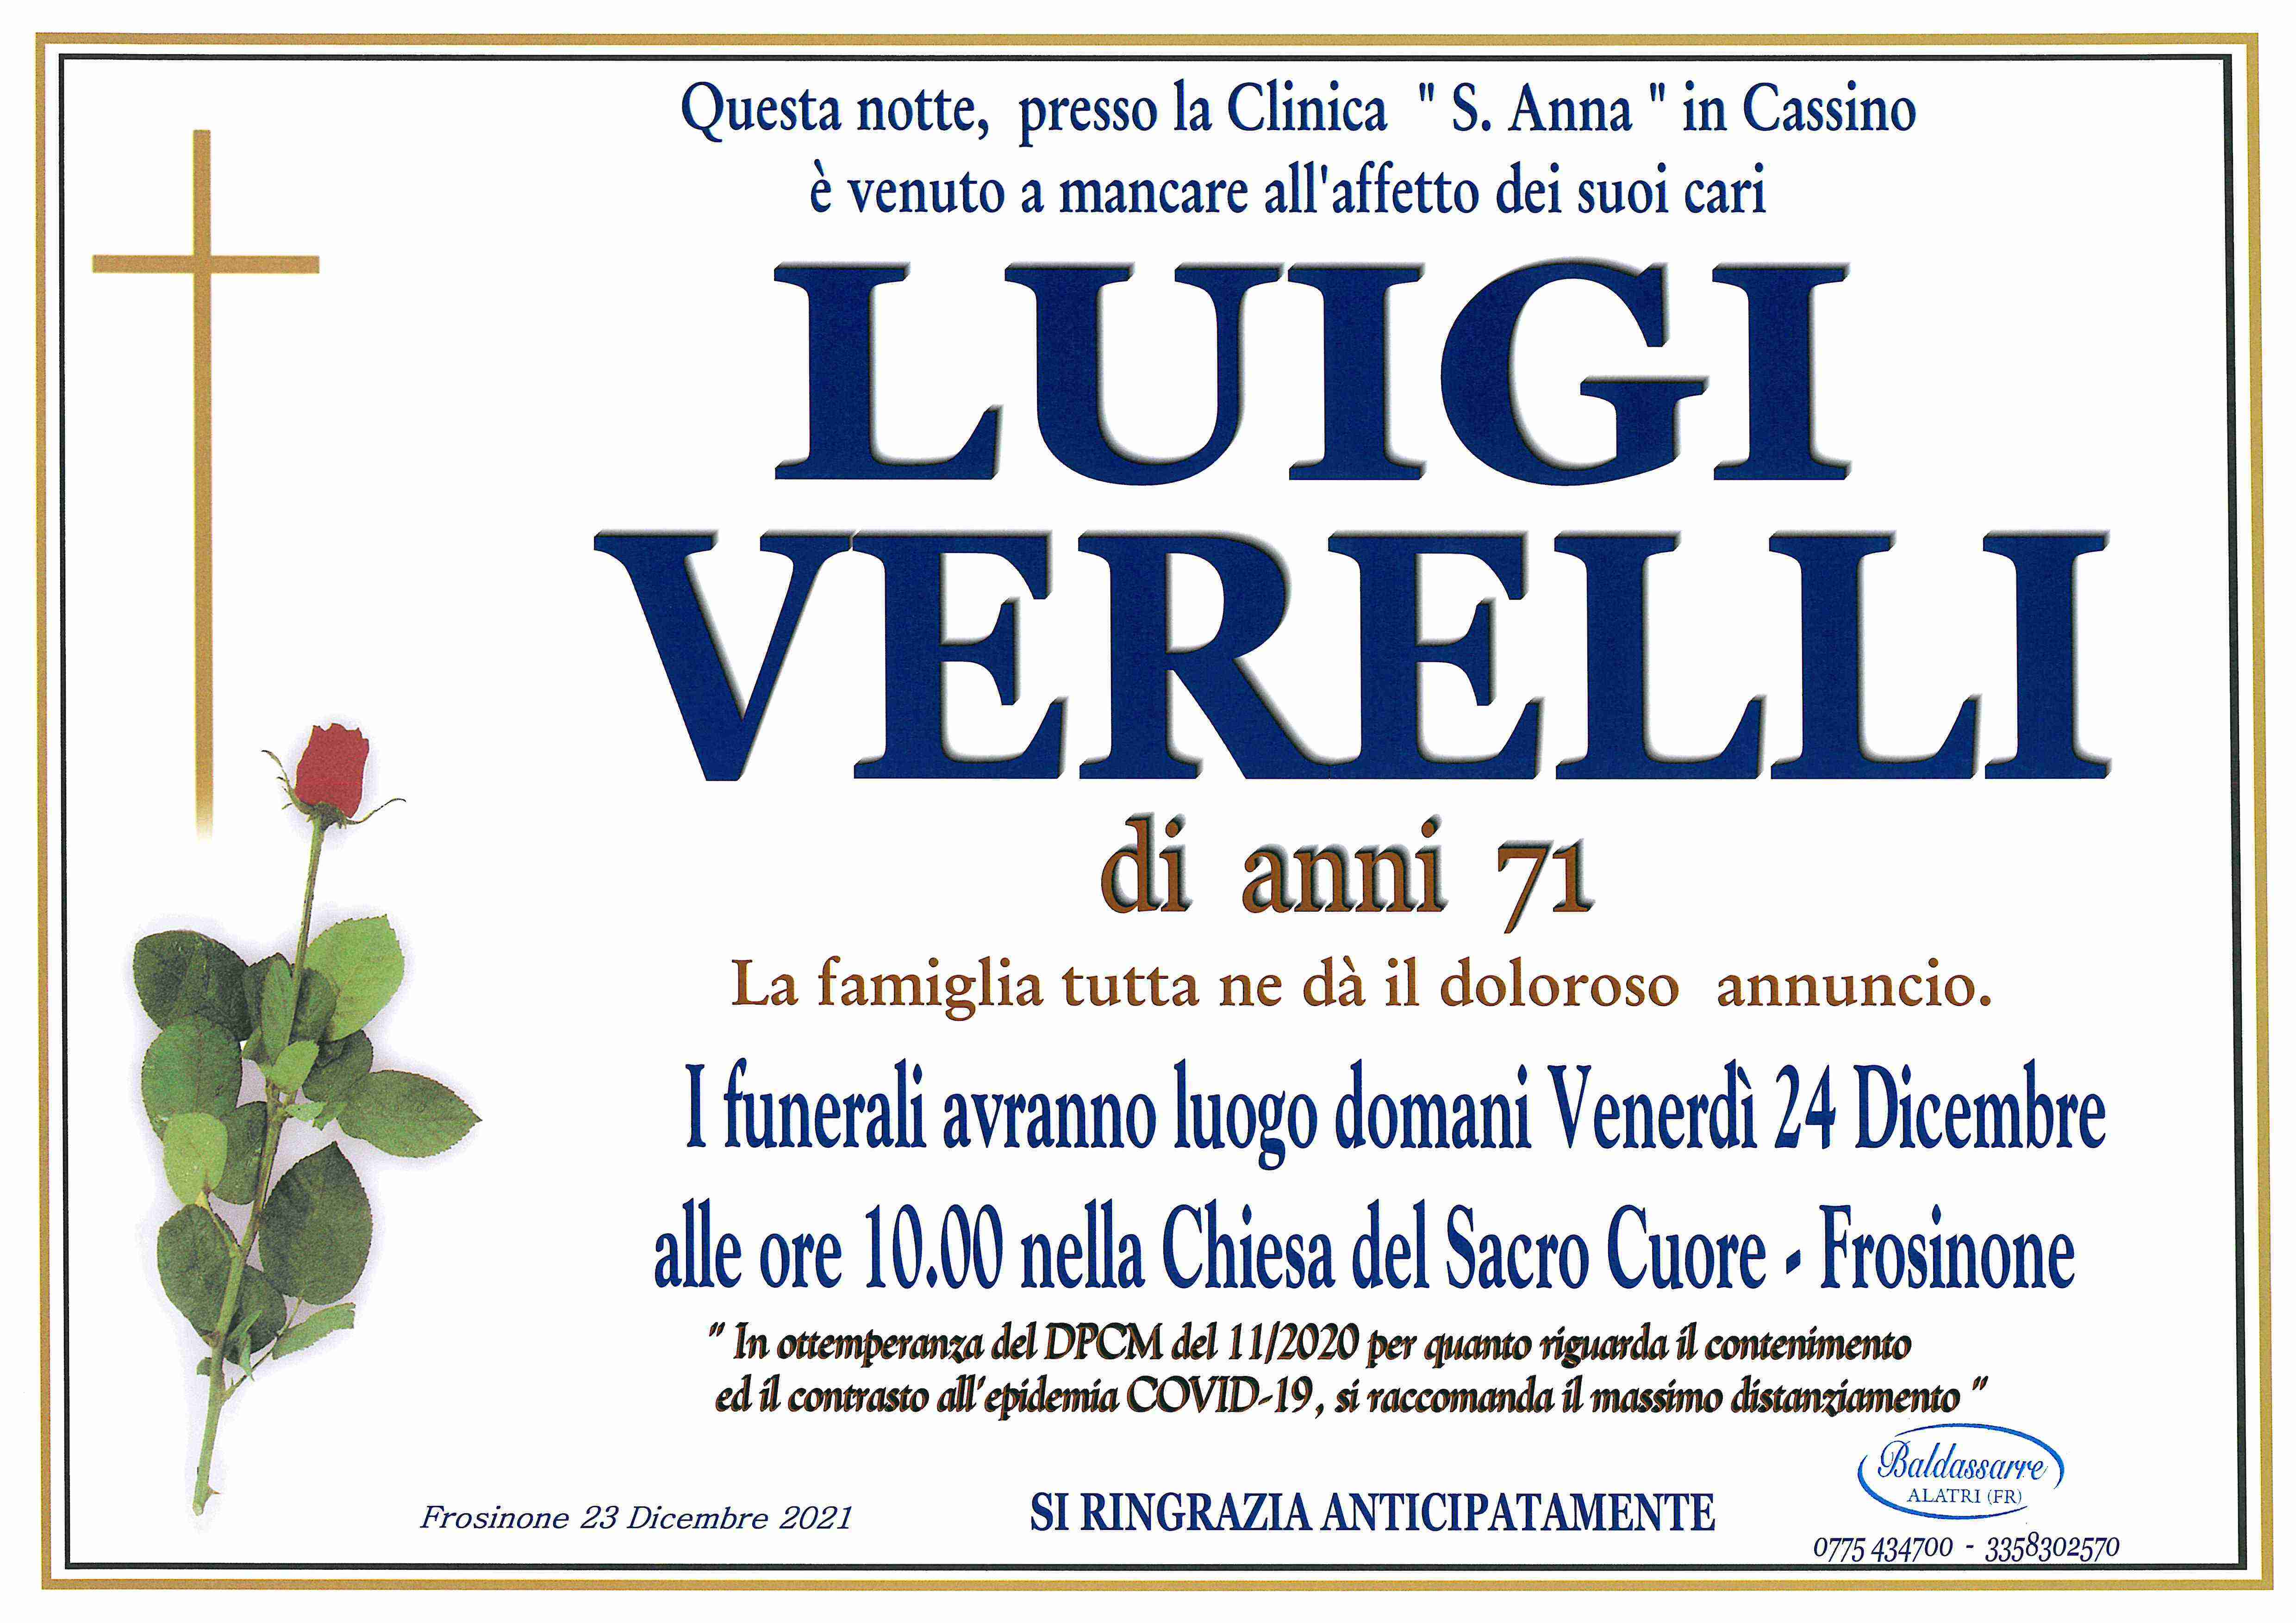 Luigi Verelli